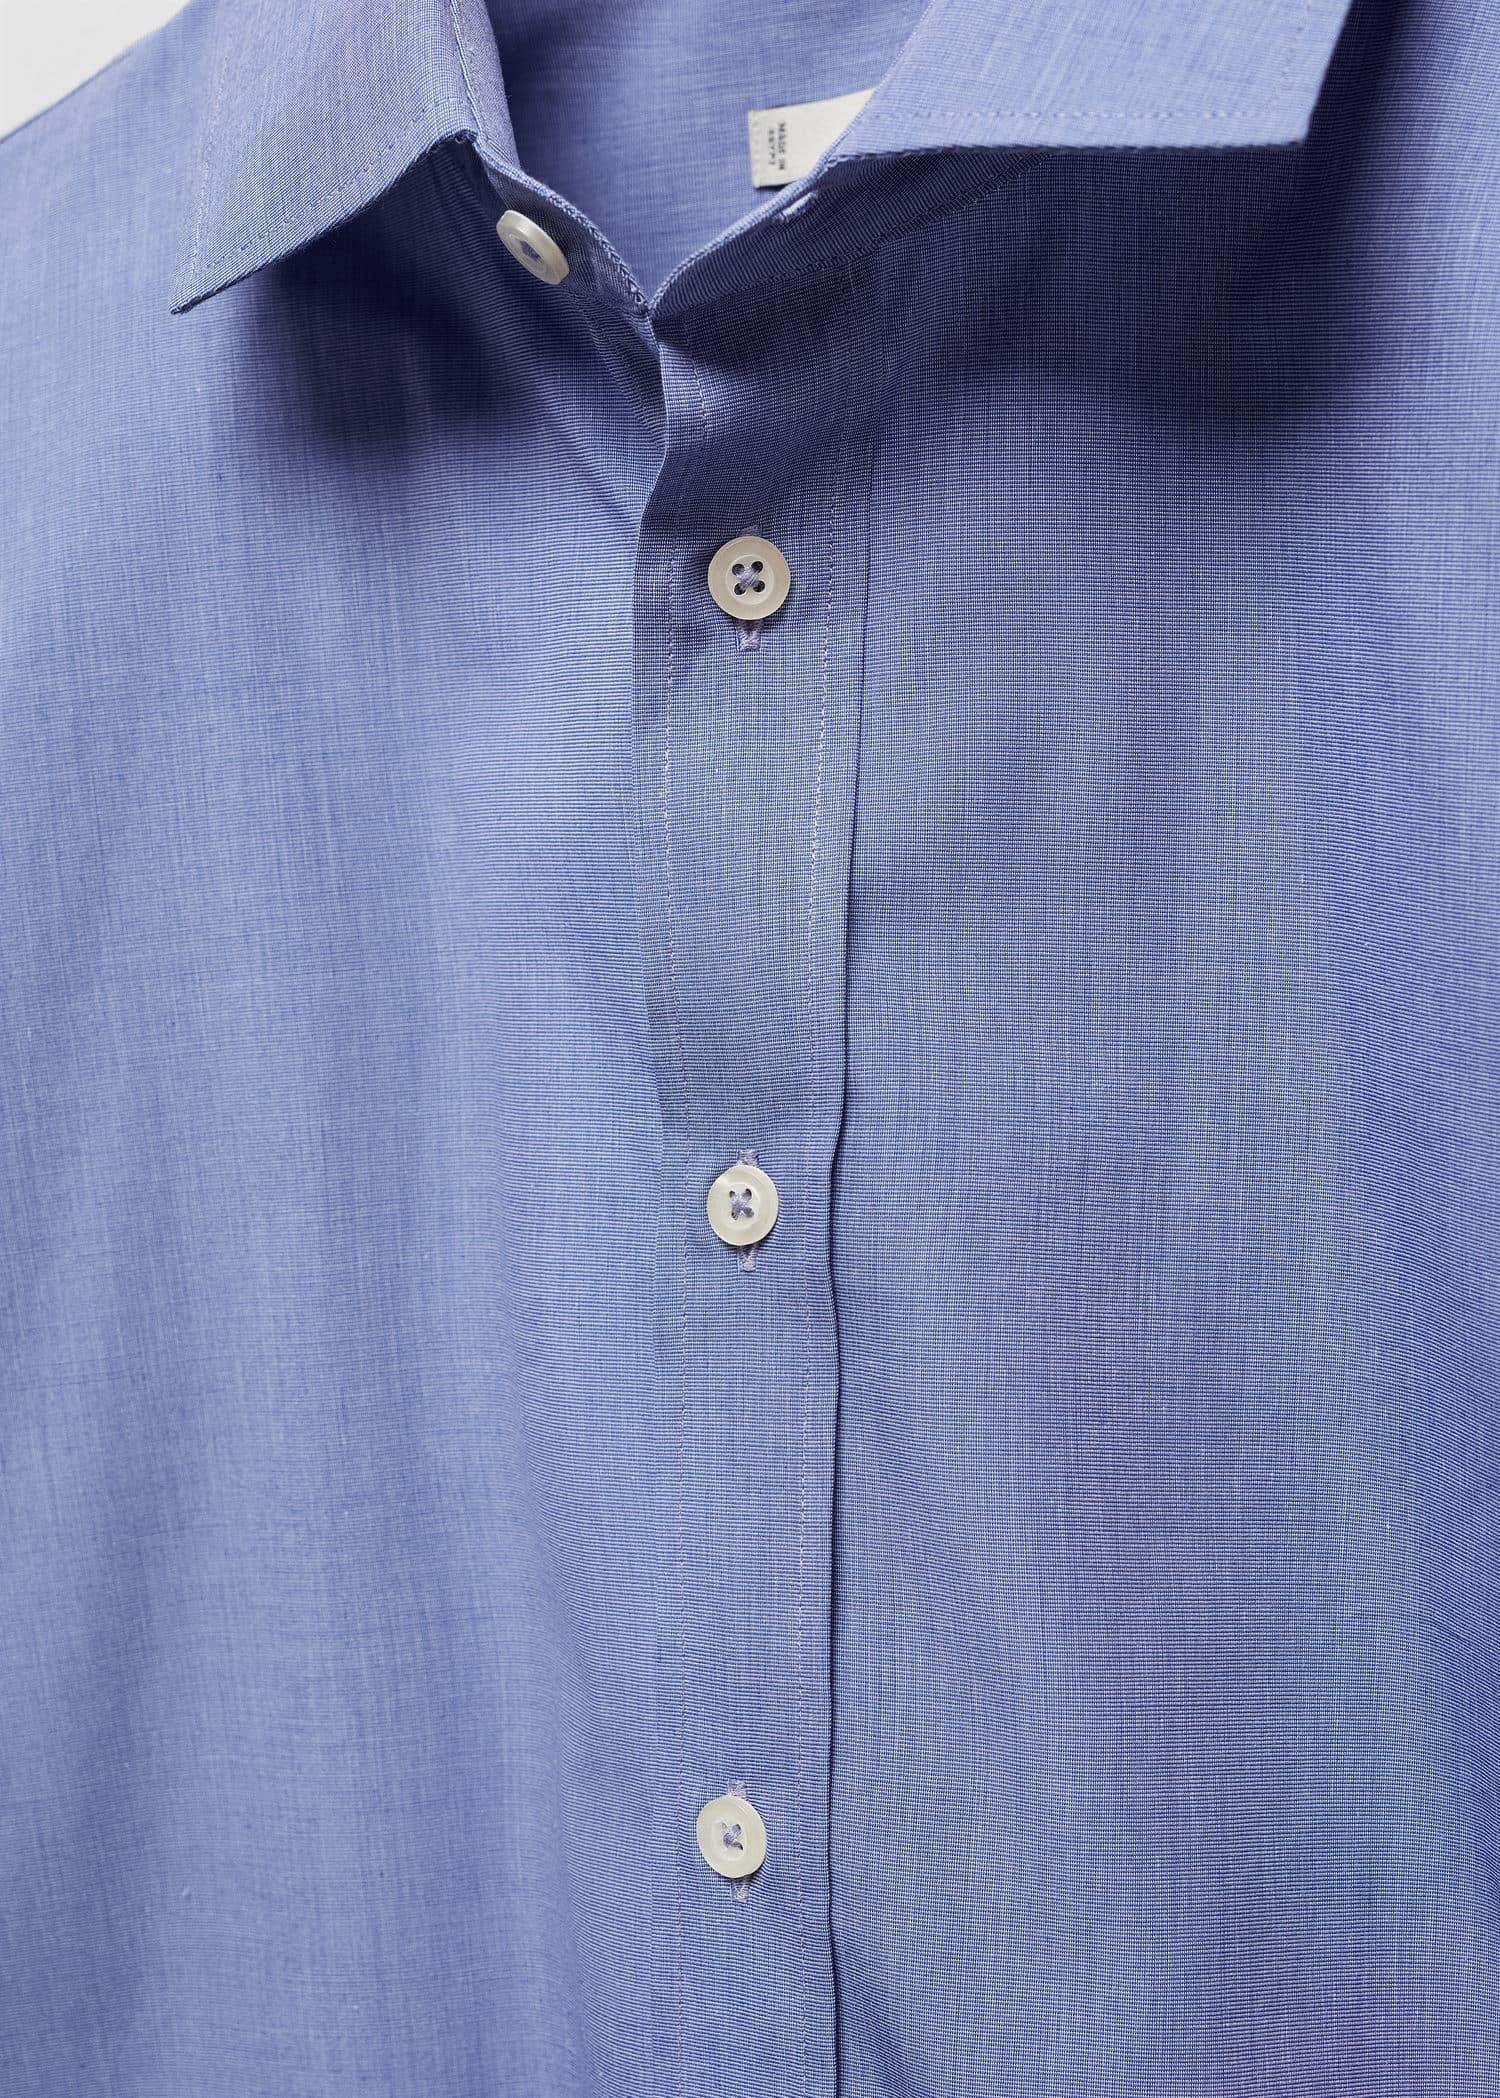 Mango - Blue Slim Fit Cotton Shirt